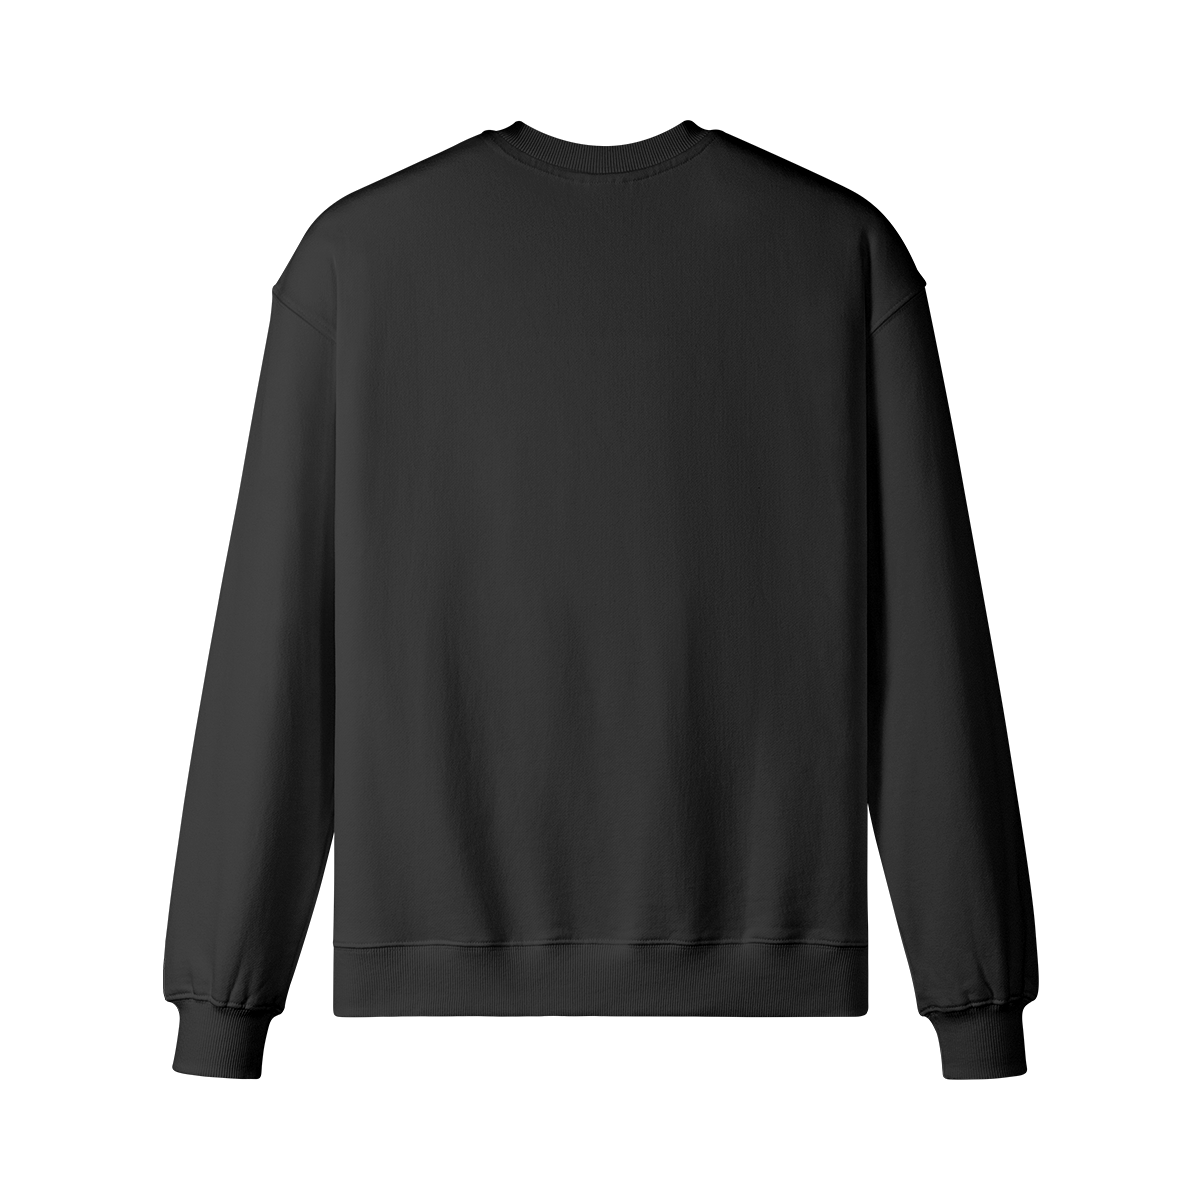 MAGIC BOB - Unisex Oversized Sweatshirt